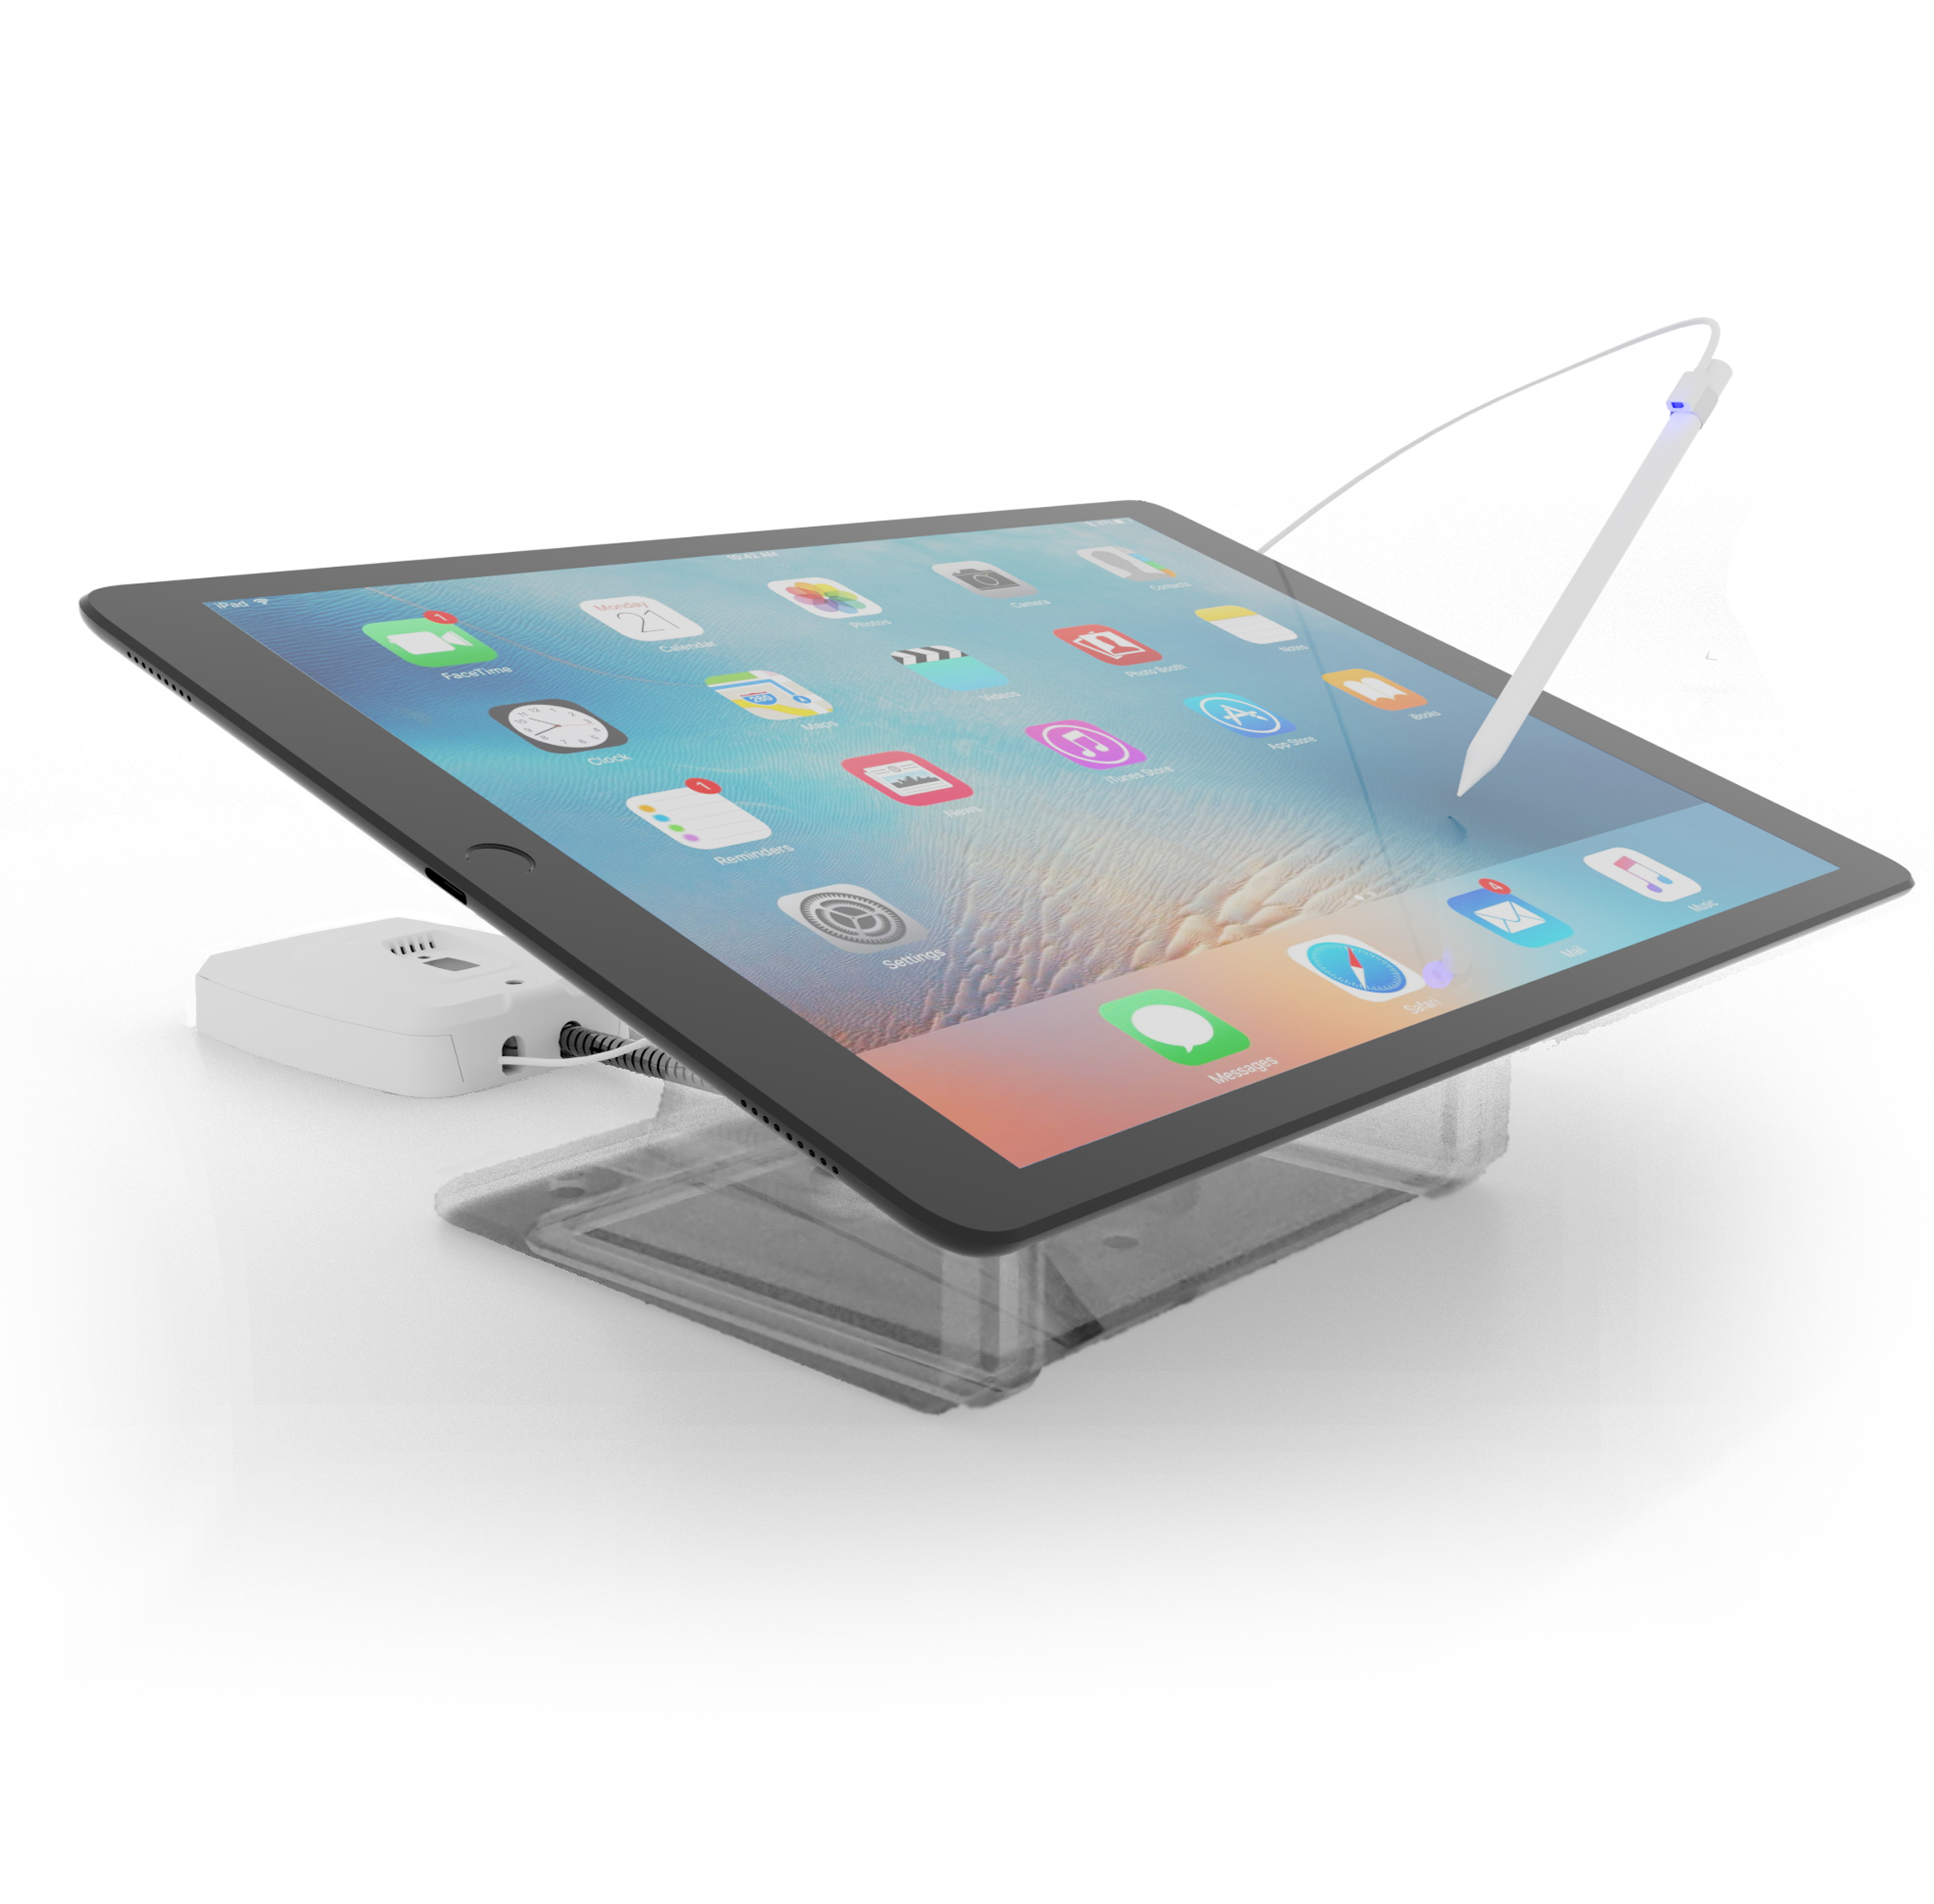 iPad Mania: The Many Uses of Apple’s Marvelous iPad